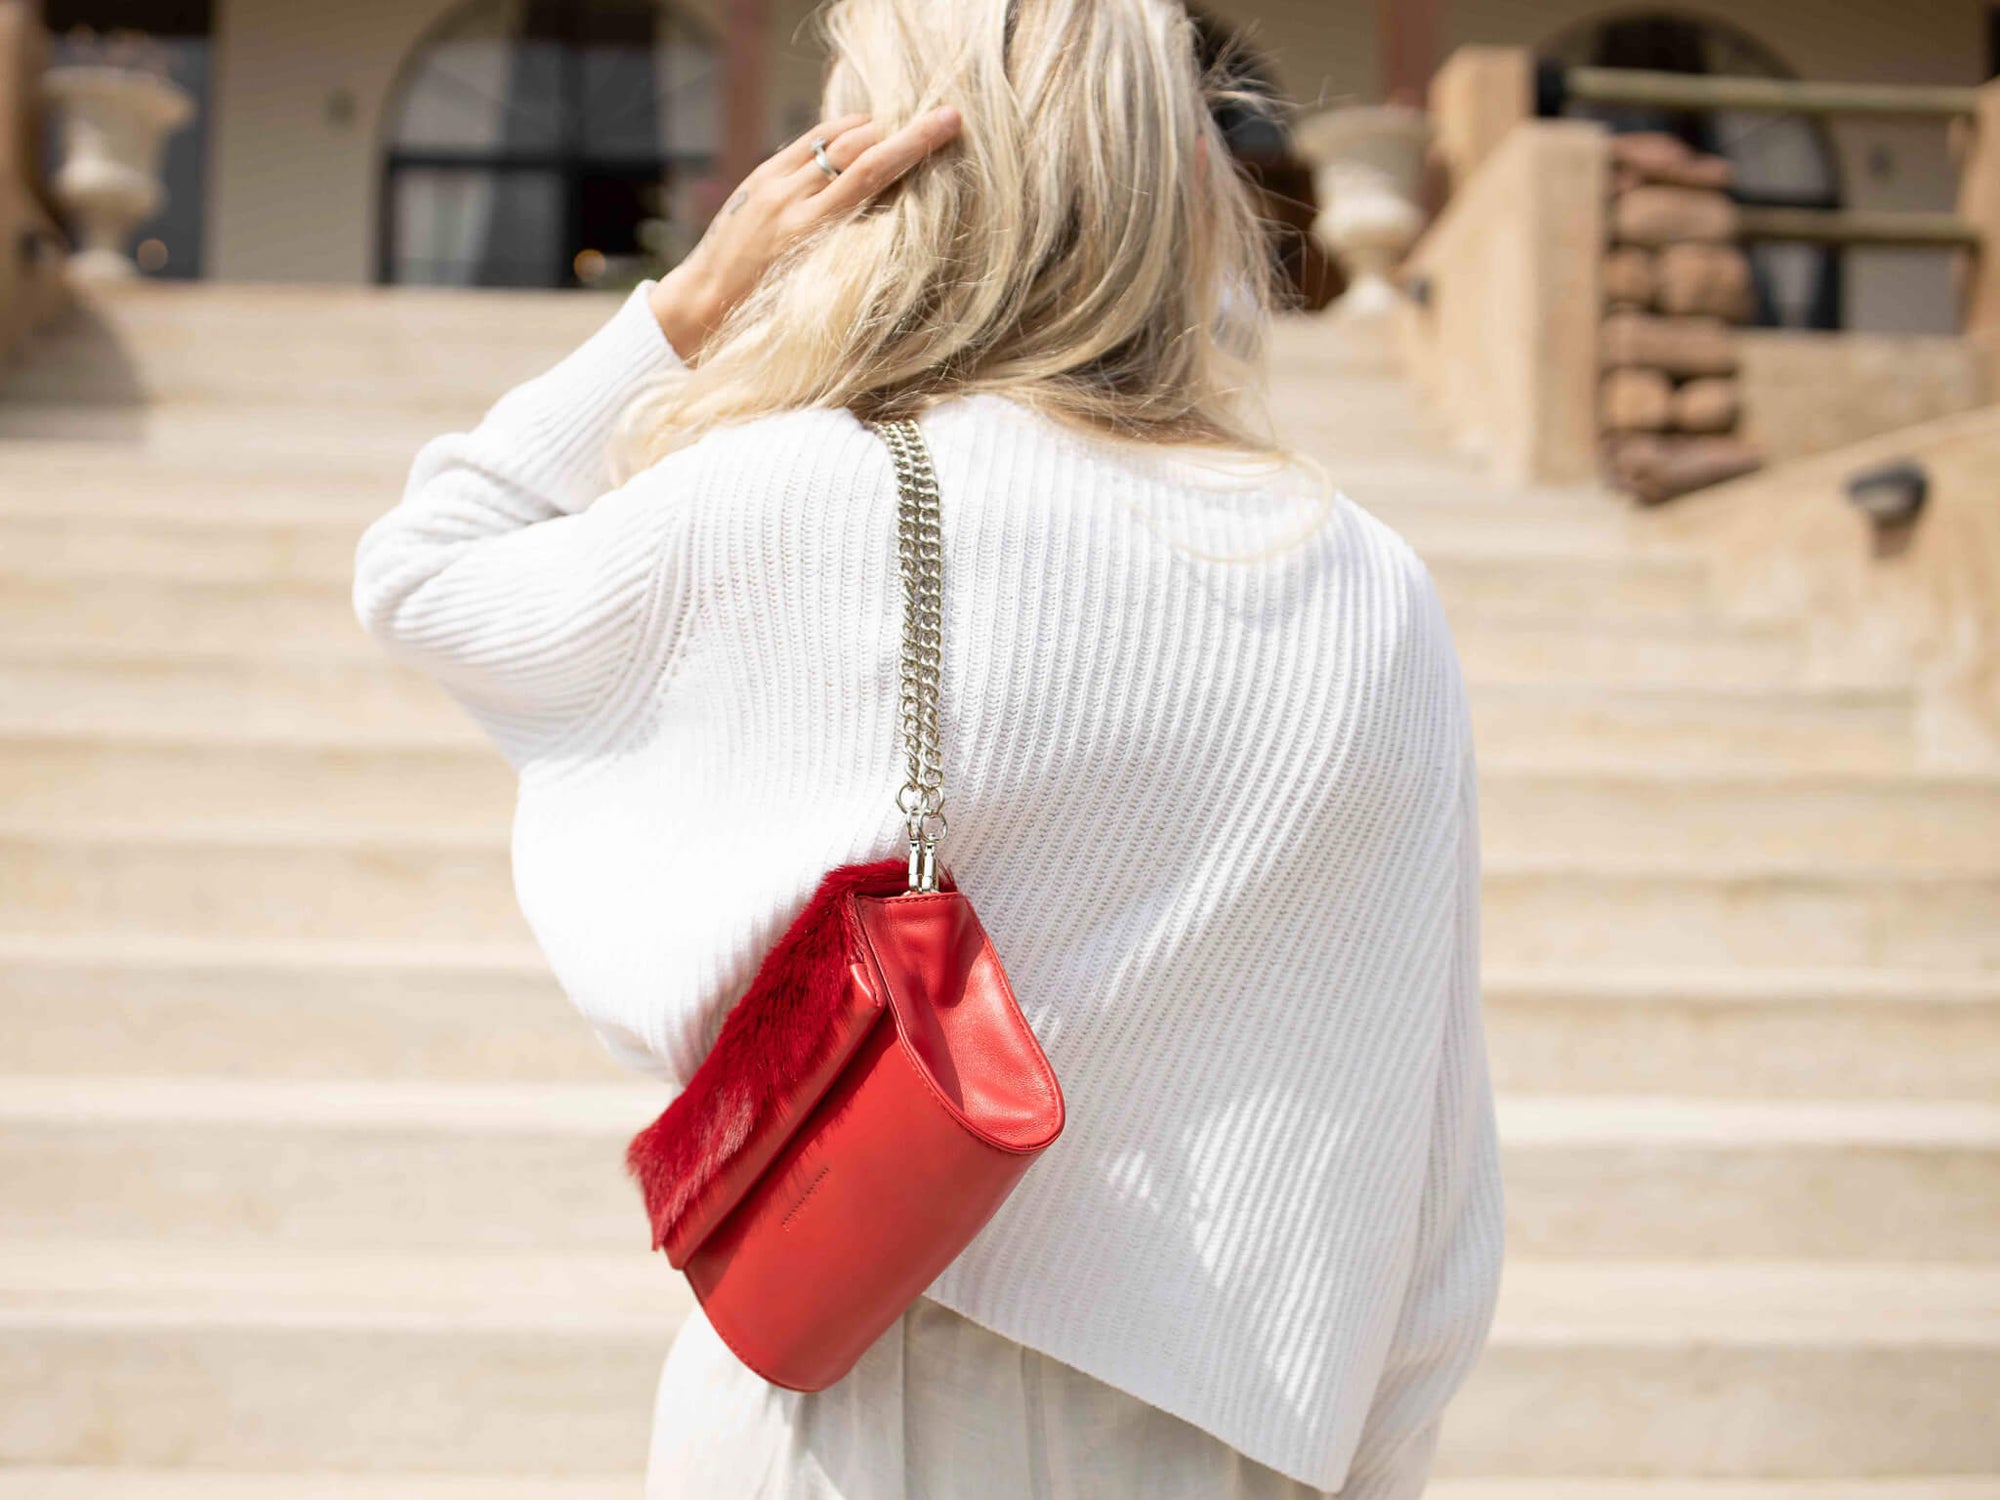 Mini Springbok Handbag in Red with a Fan